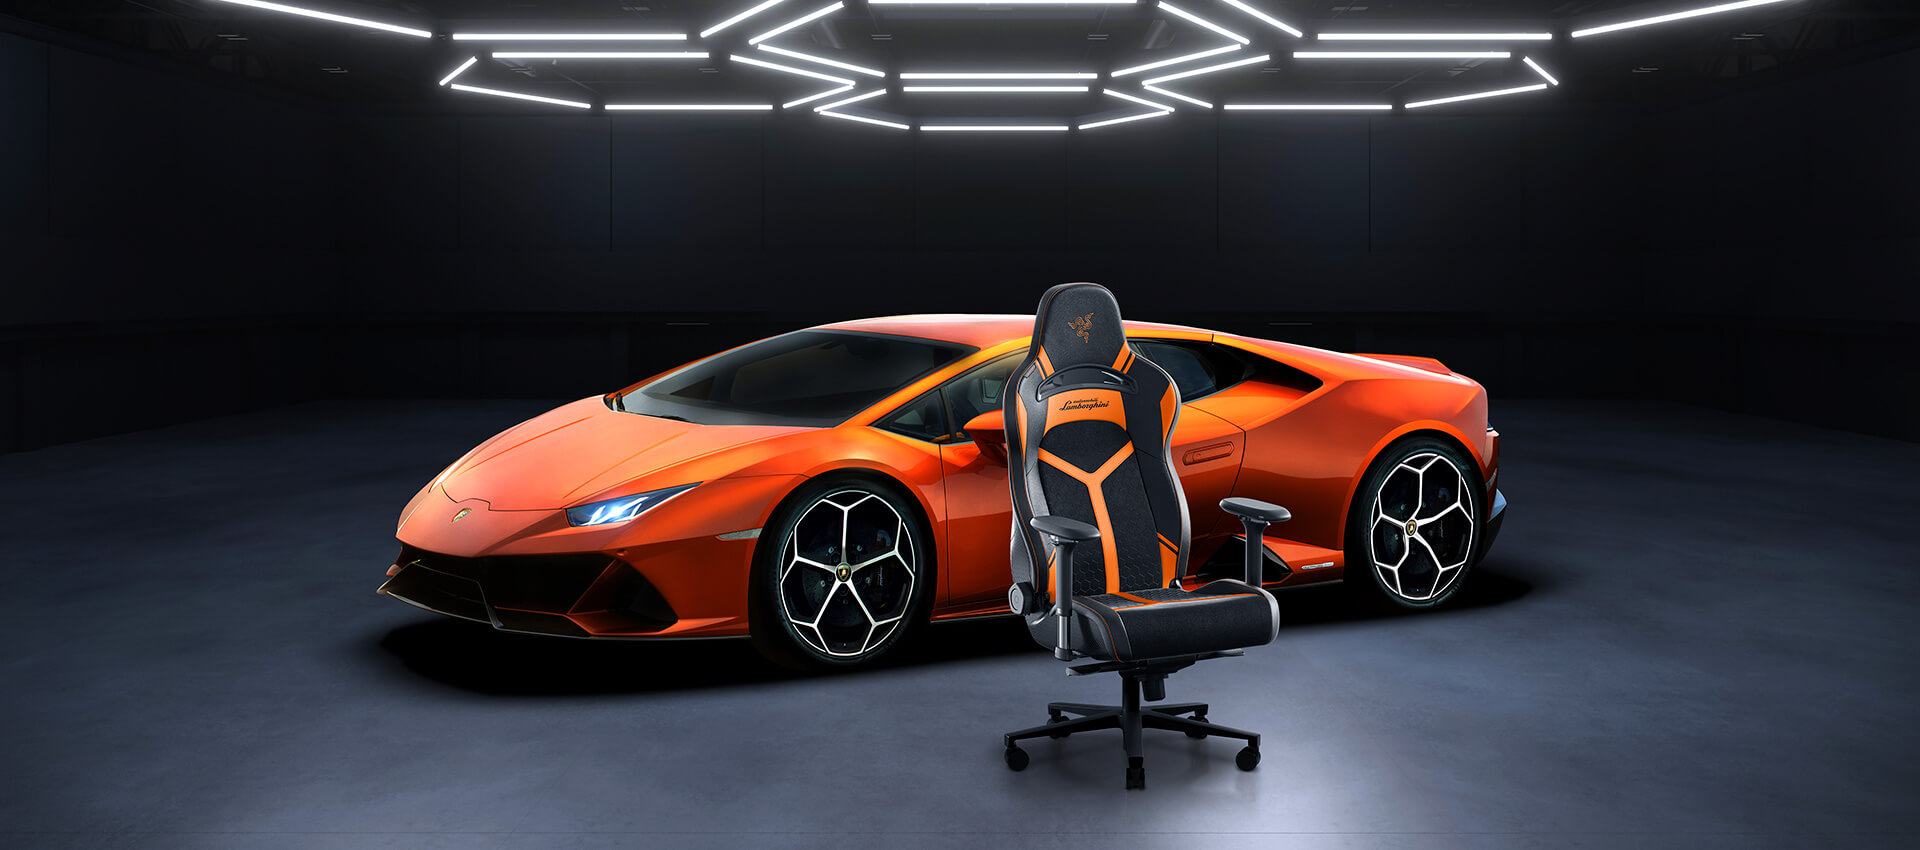 Der Gaming-Stuhl Razer ENki Pro in Lamborghini-OPtik vor einem orangen Lamborghini.